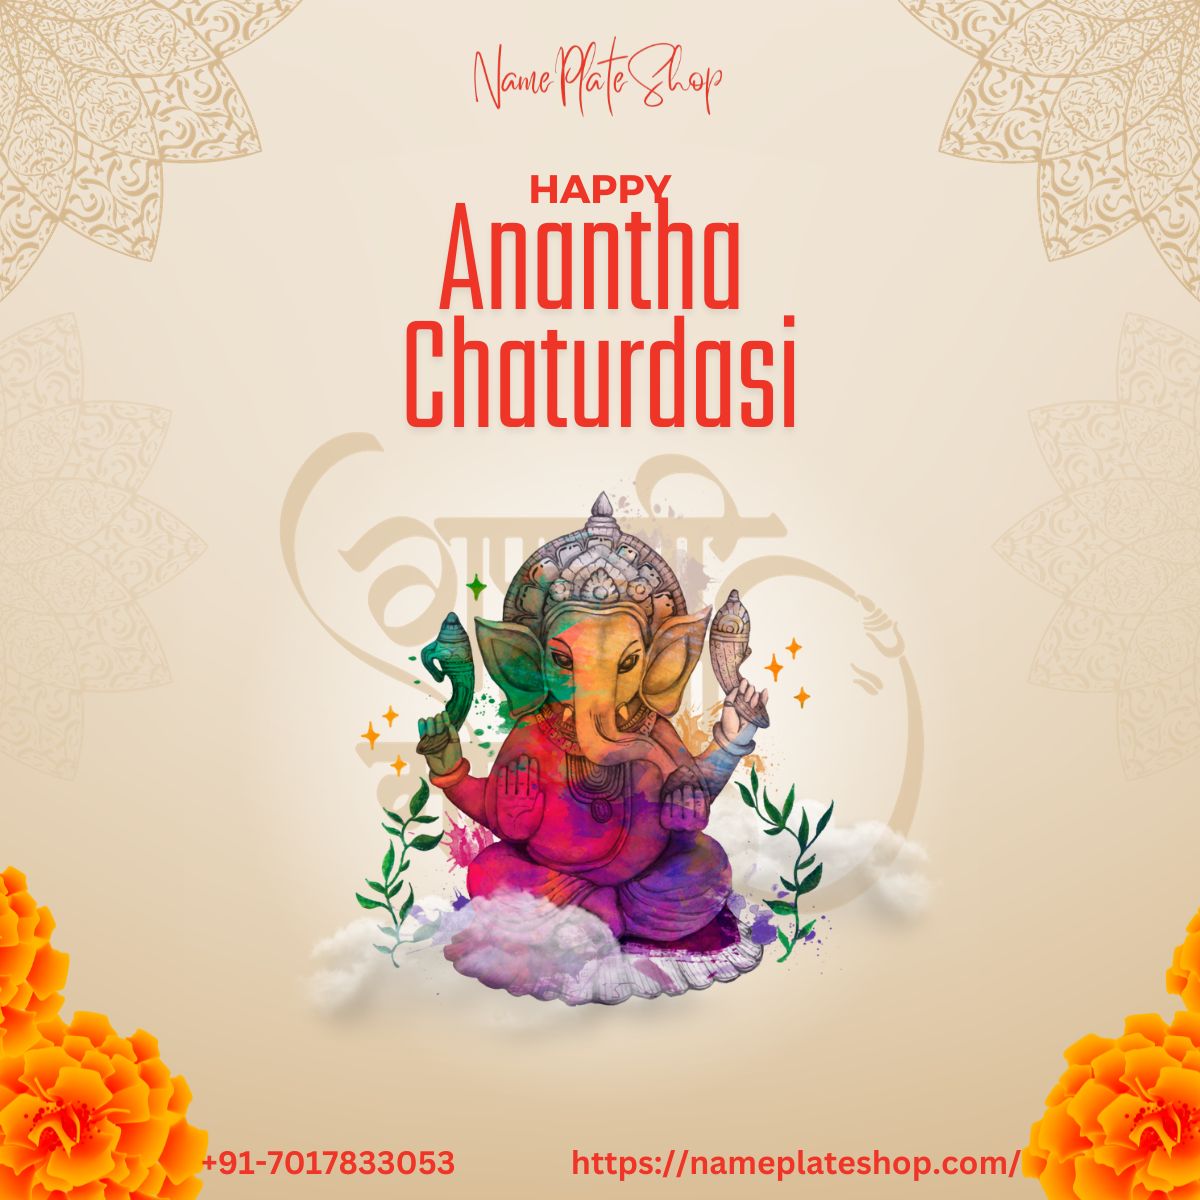 Warm Greetings on Ananta Chaturdashi from Nameplateshop